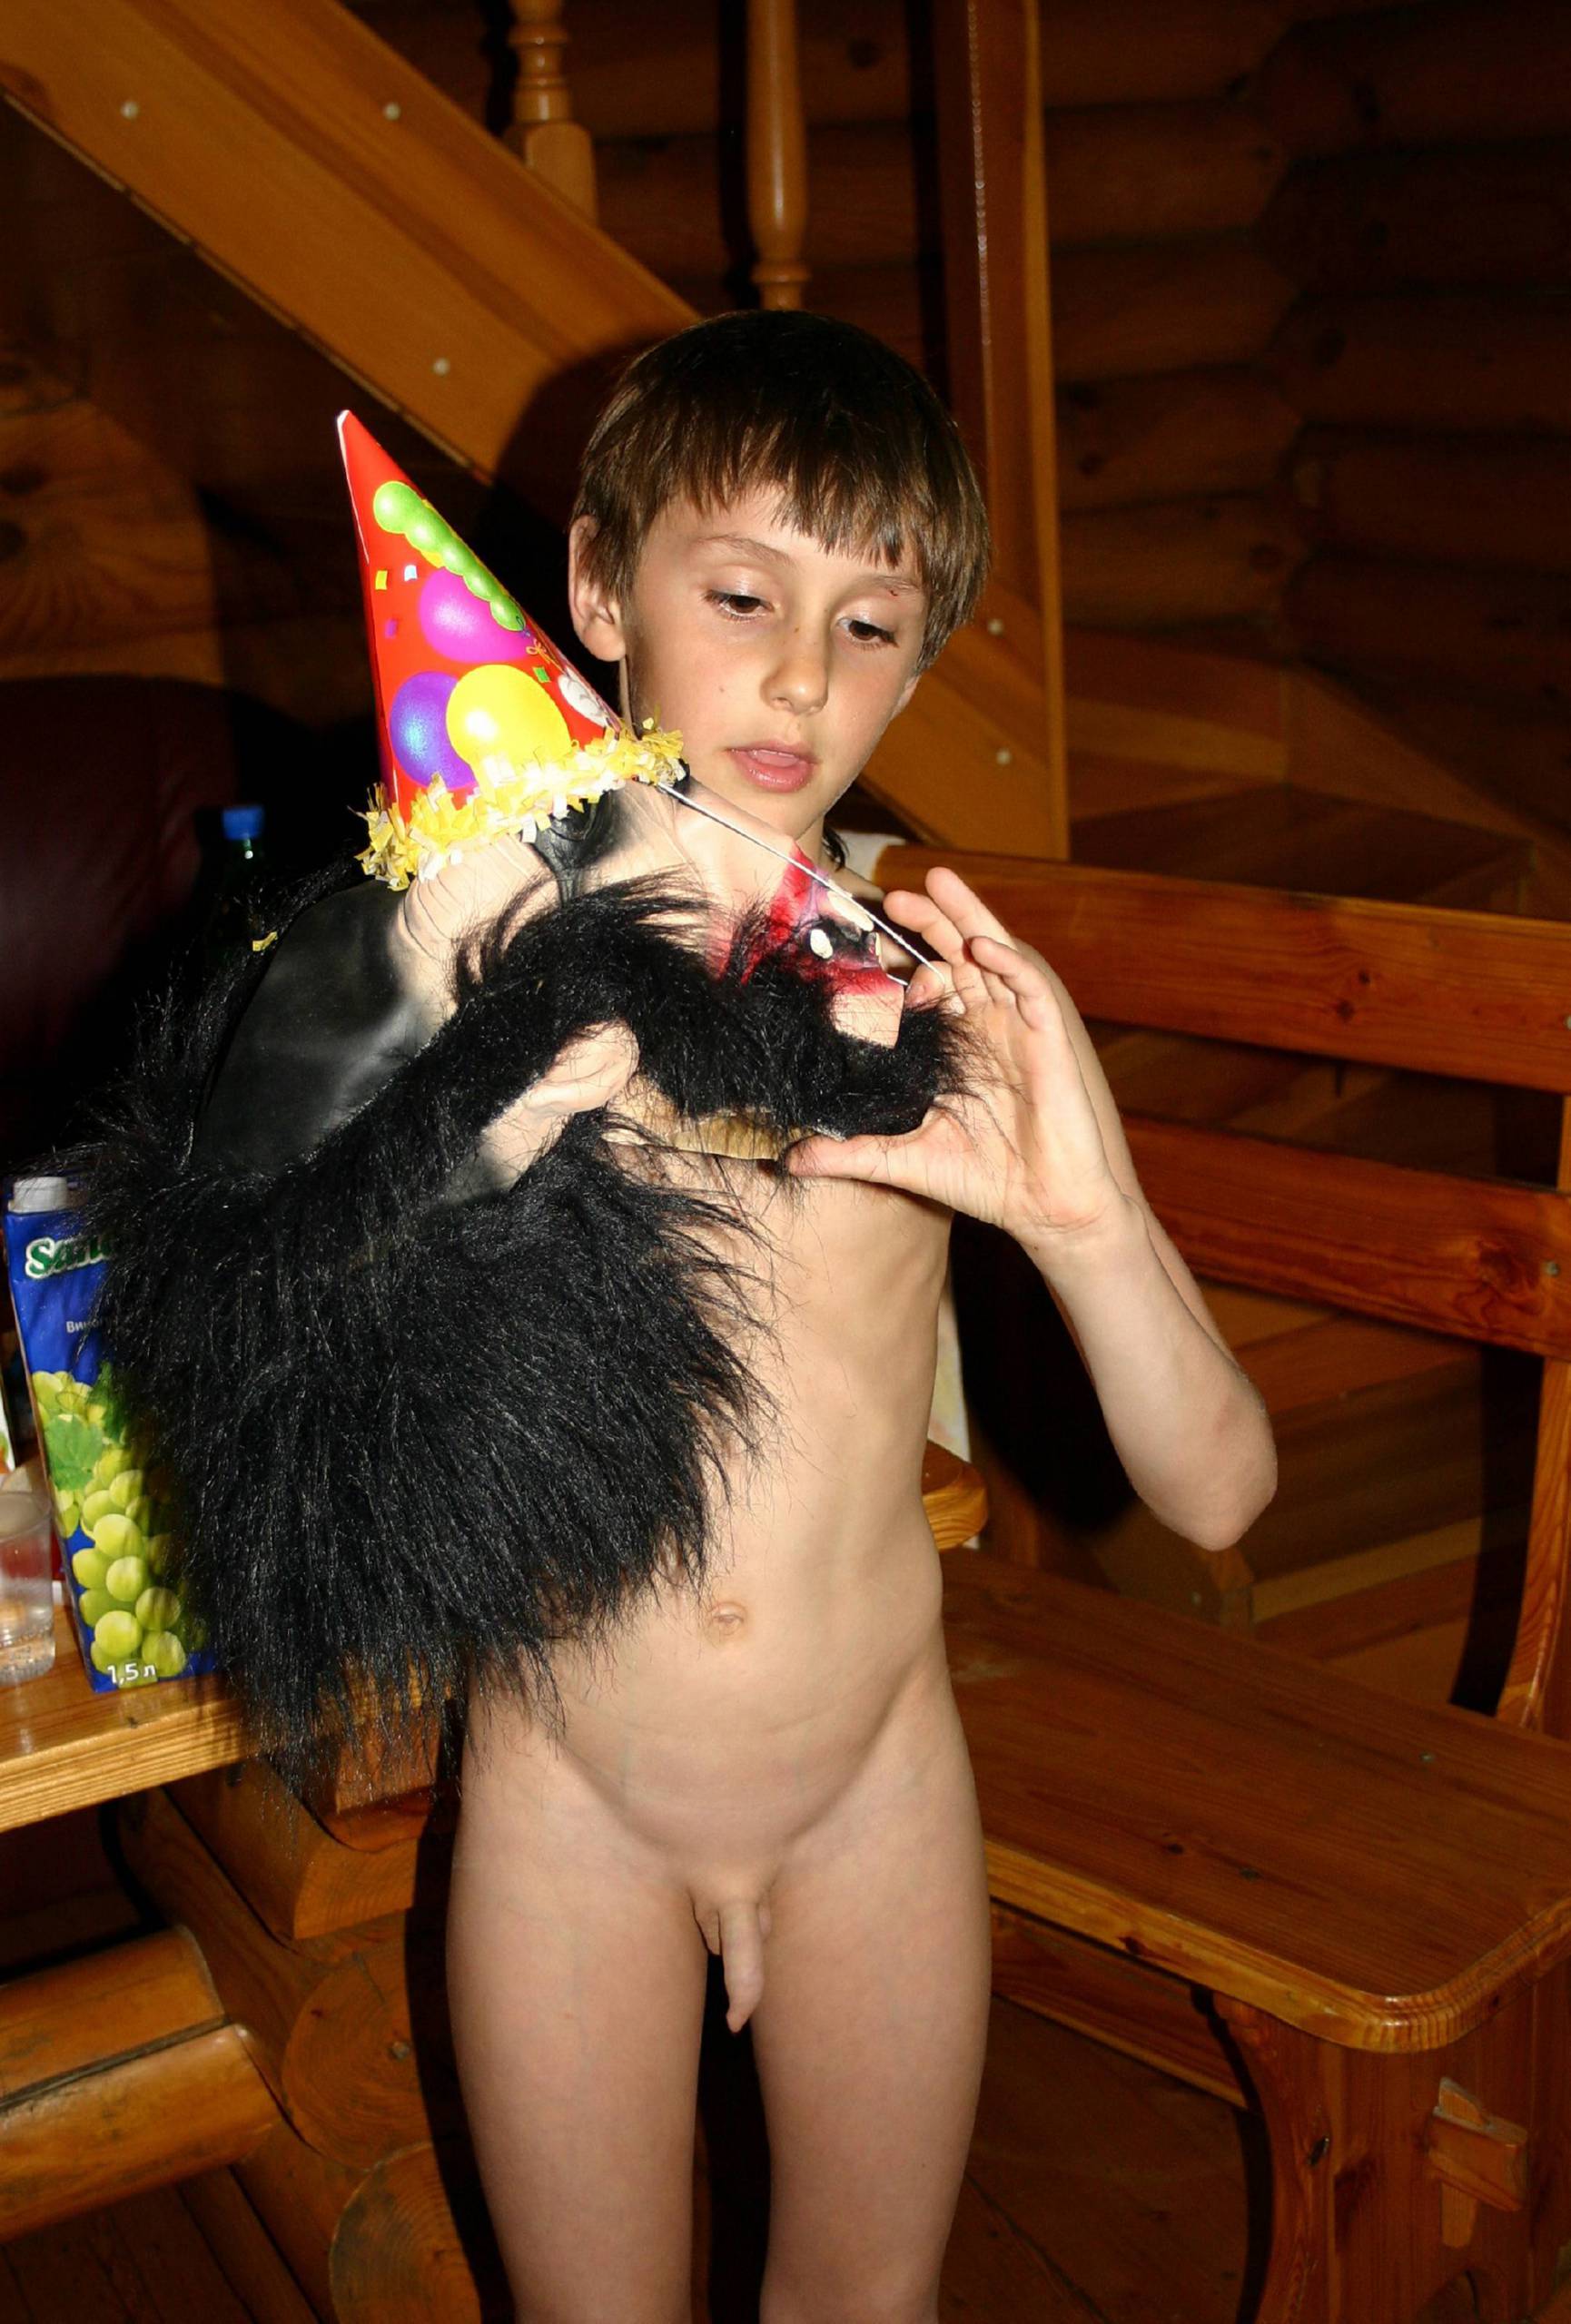 Nudist Pictures Birthday Diner Celebration - 1